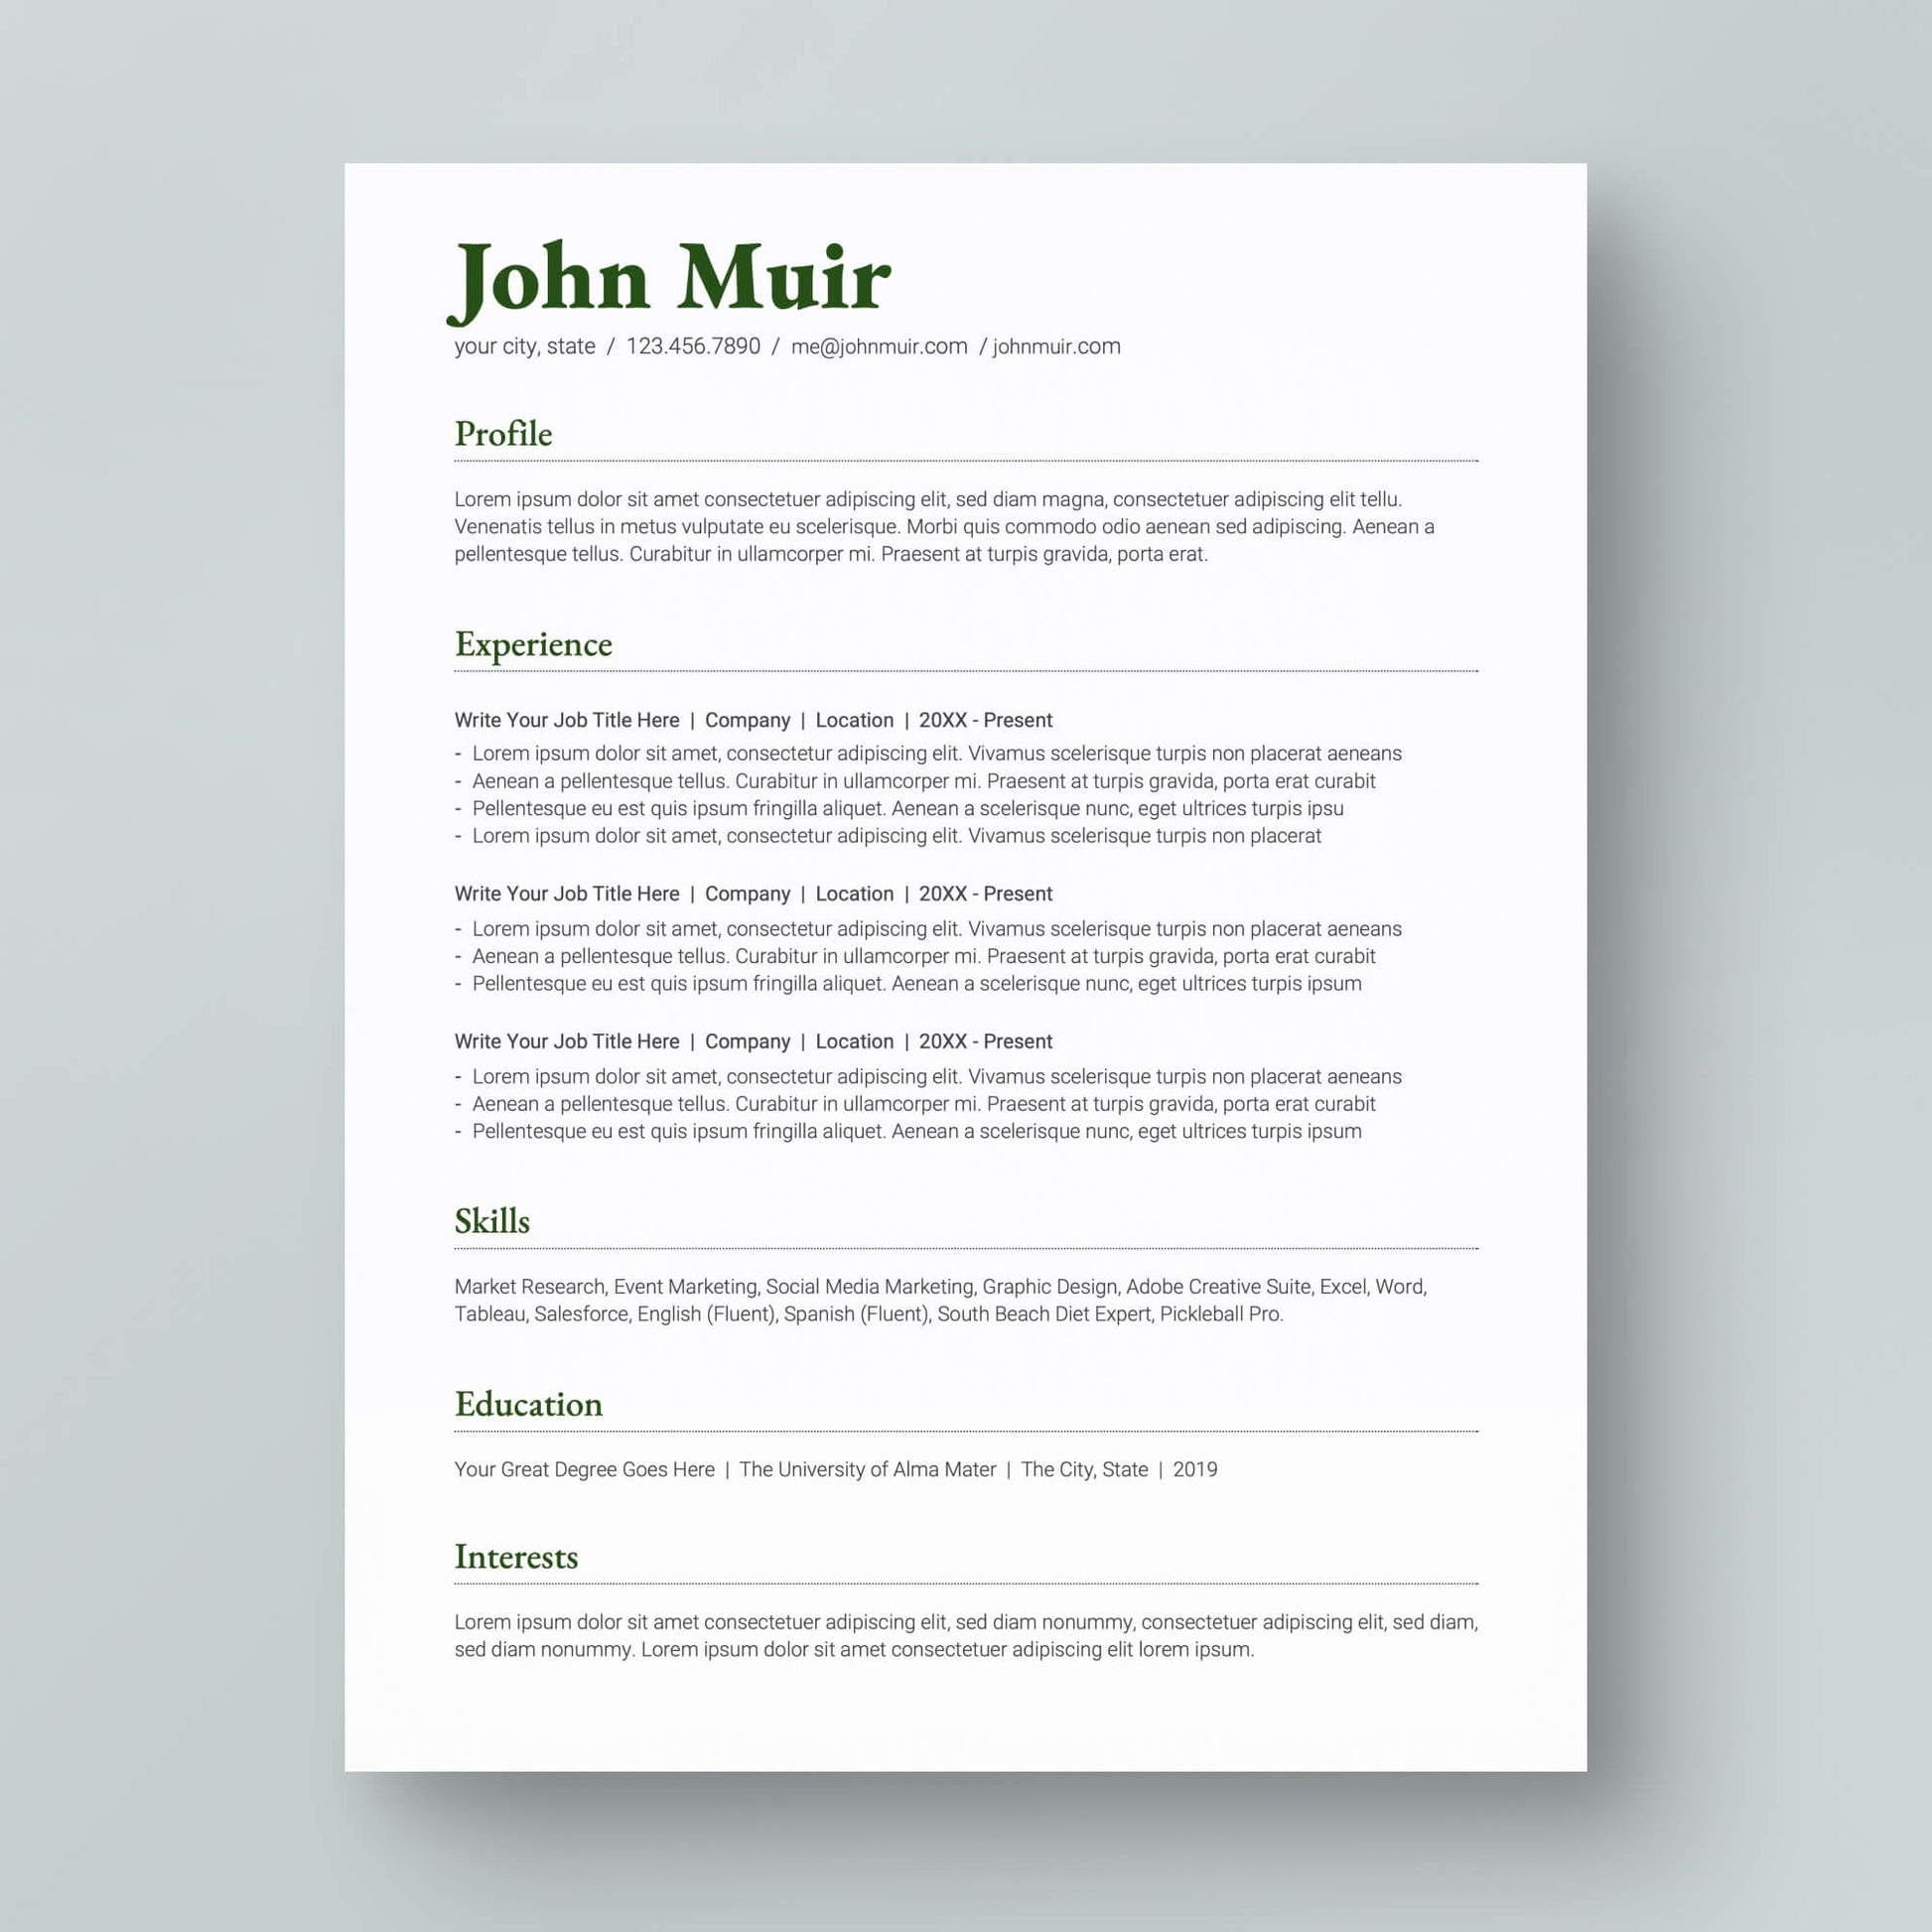 Resume Template: John Muir Lite - MioDocs